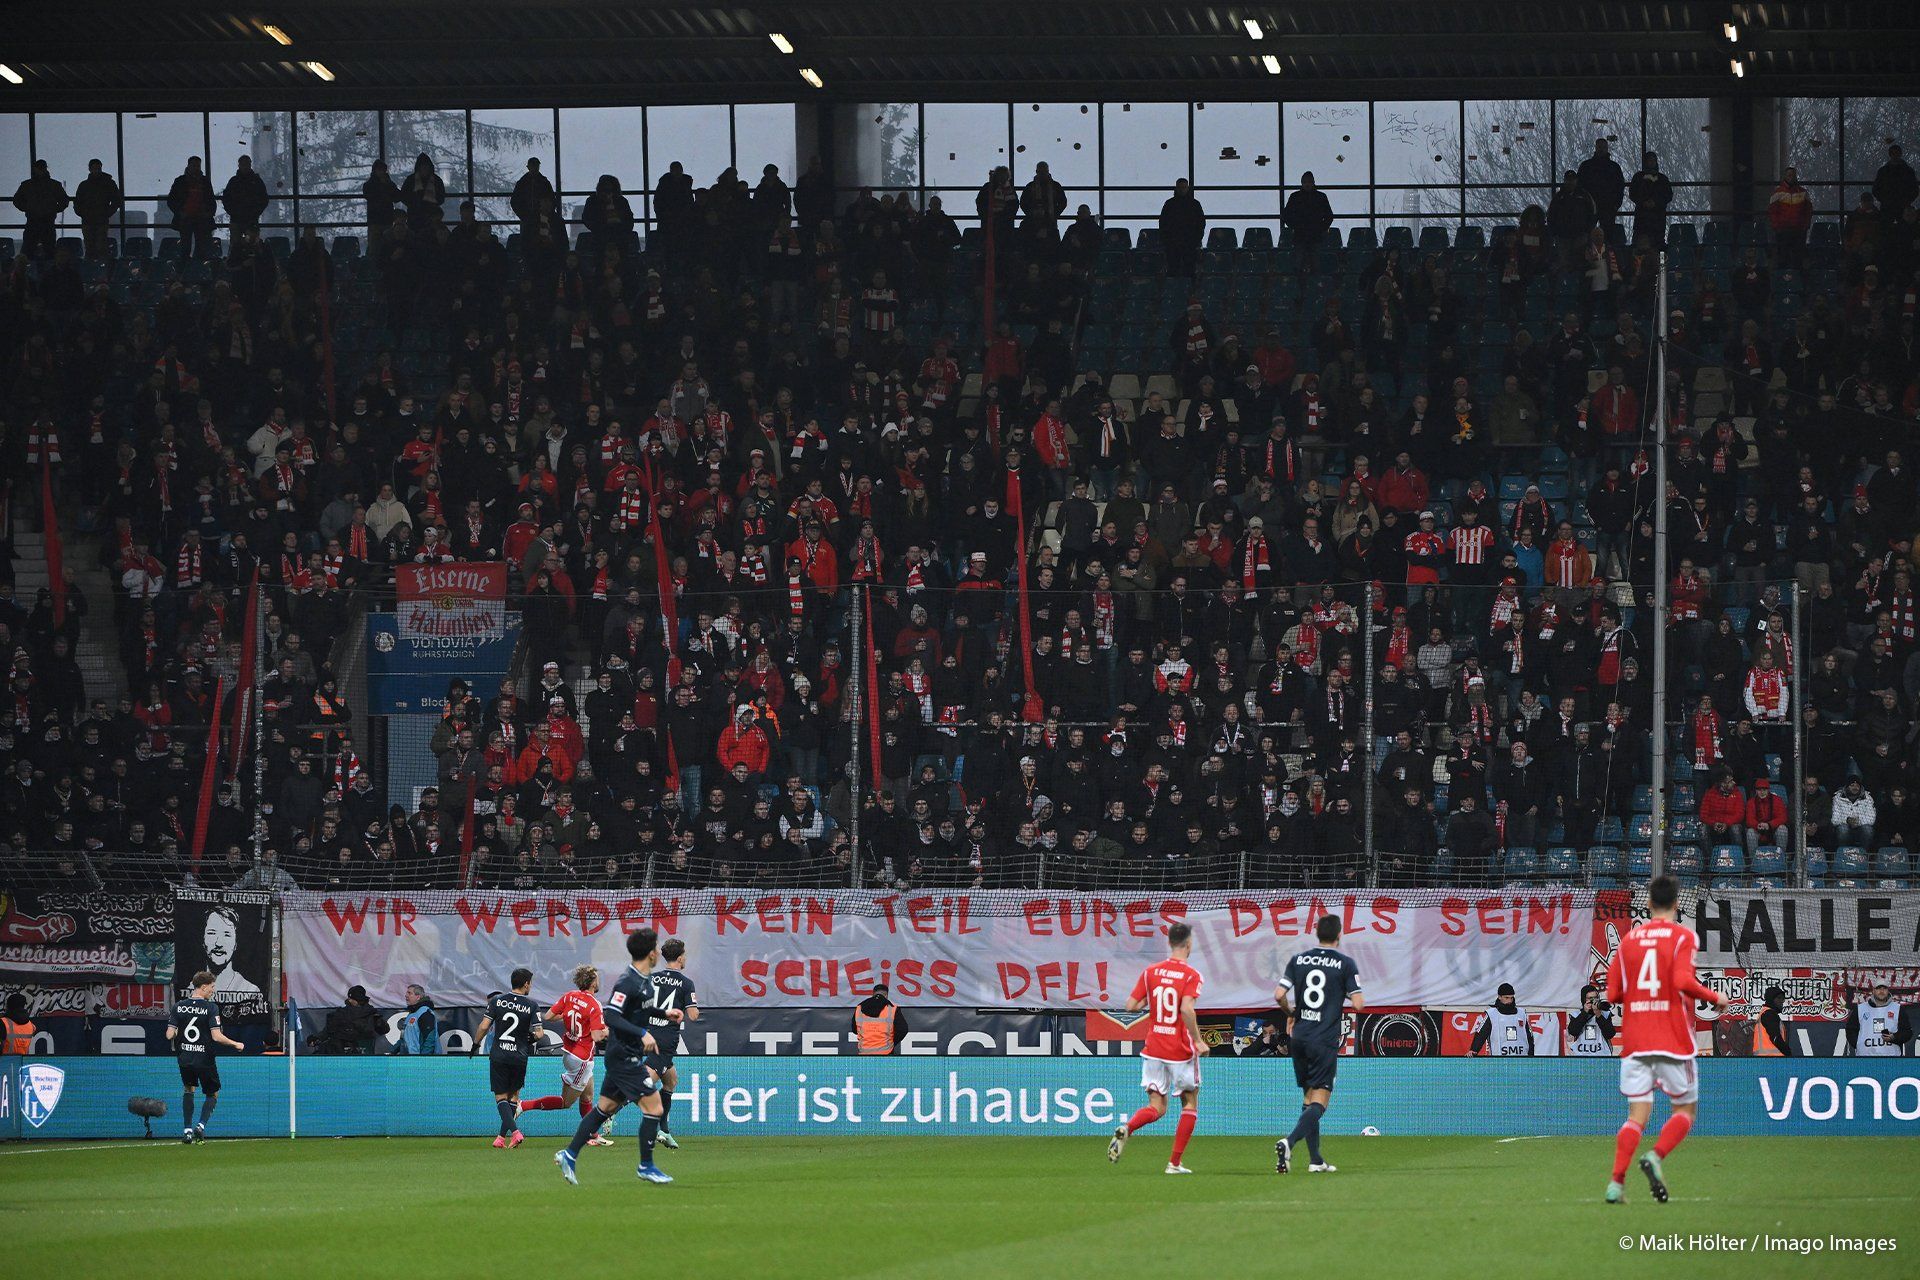 Protes yg dilayangkan para ultras di laga-laga Bundesliga & 2.Bundesliga